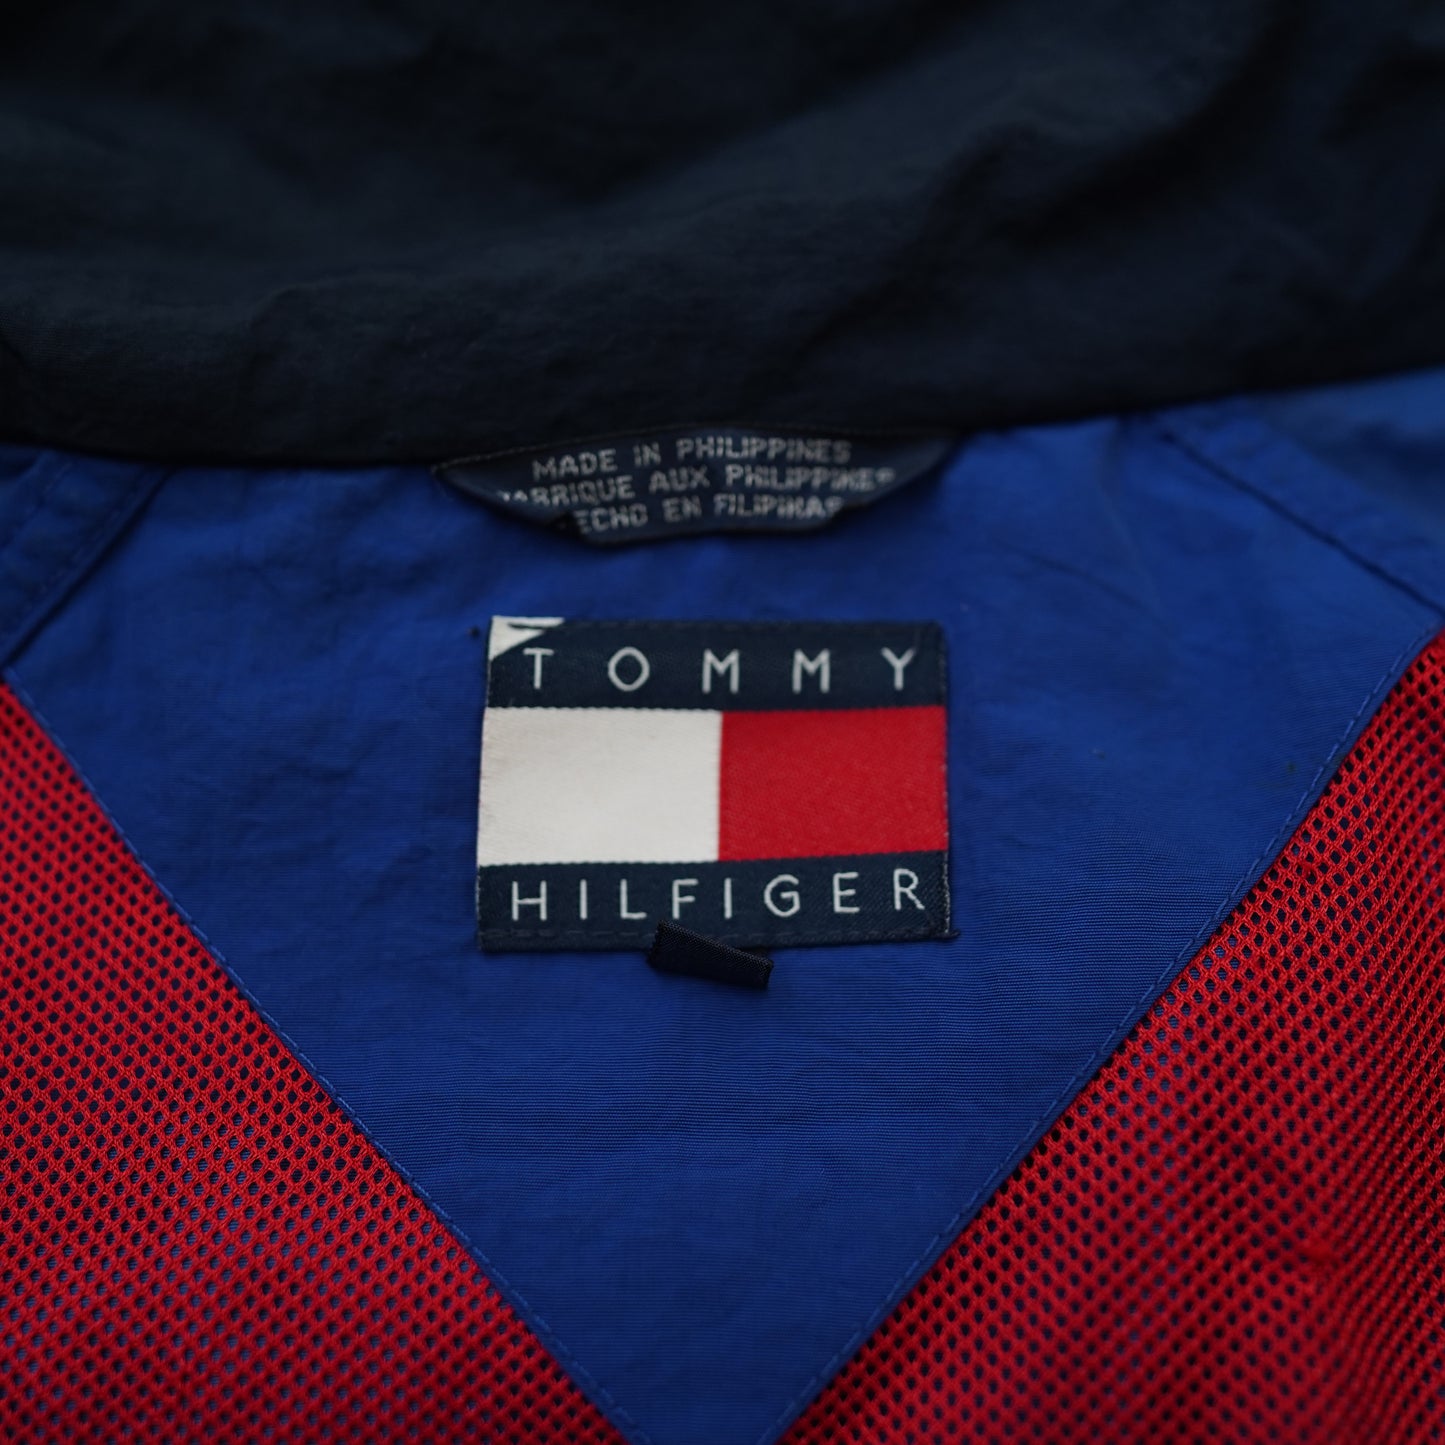 90s TOMMY HILFIGER nylon jacket